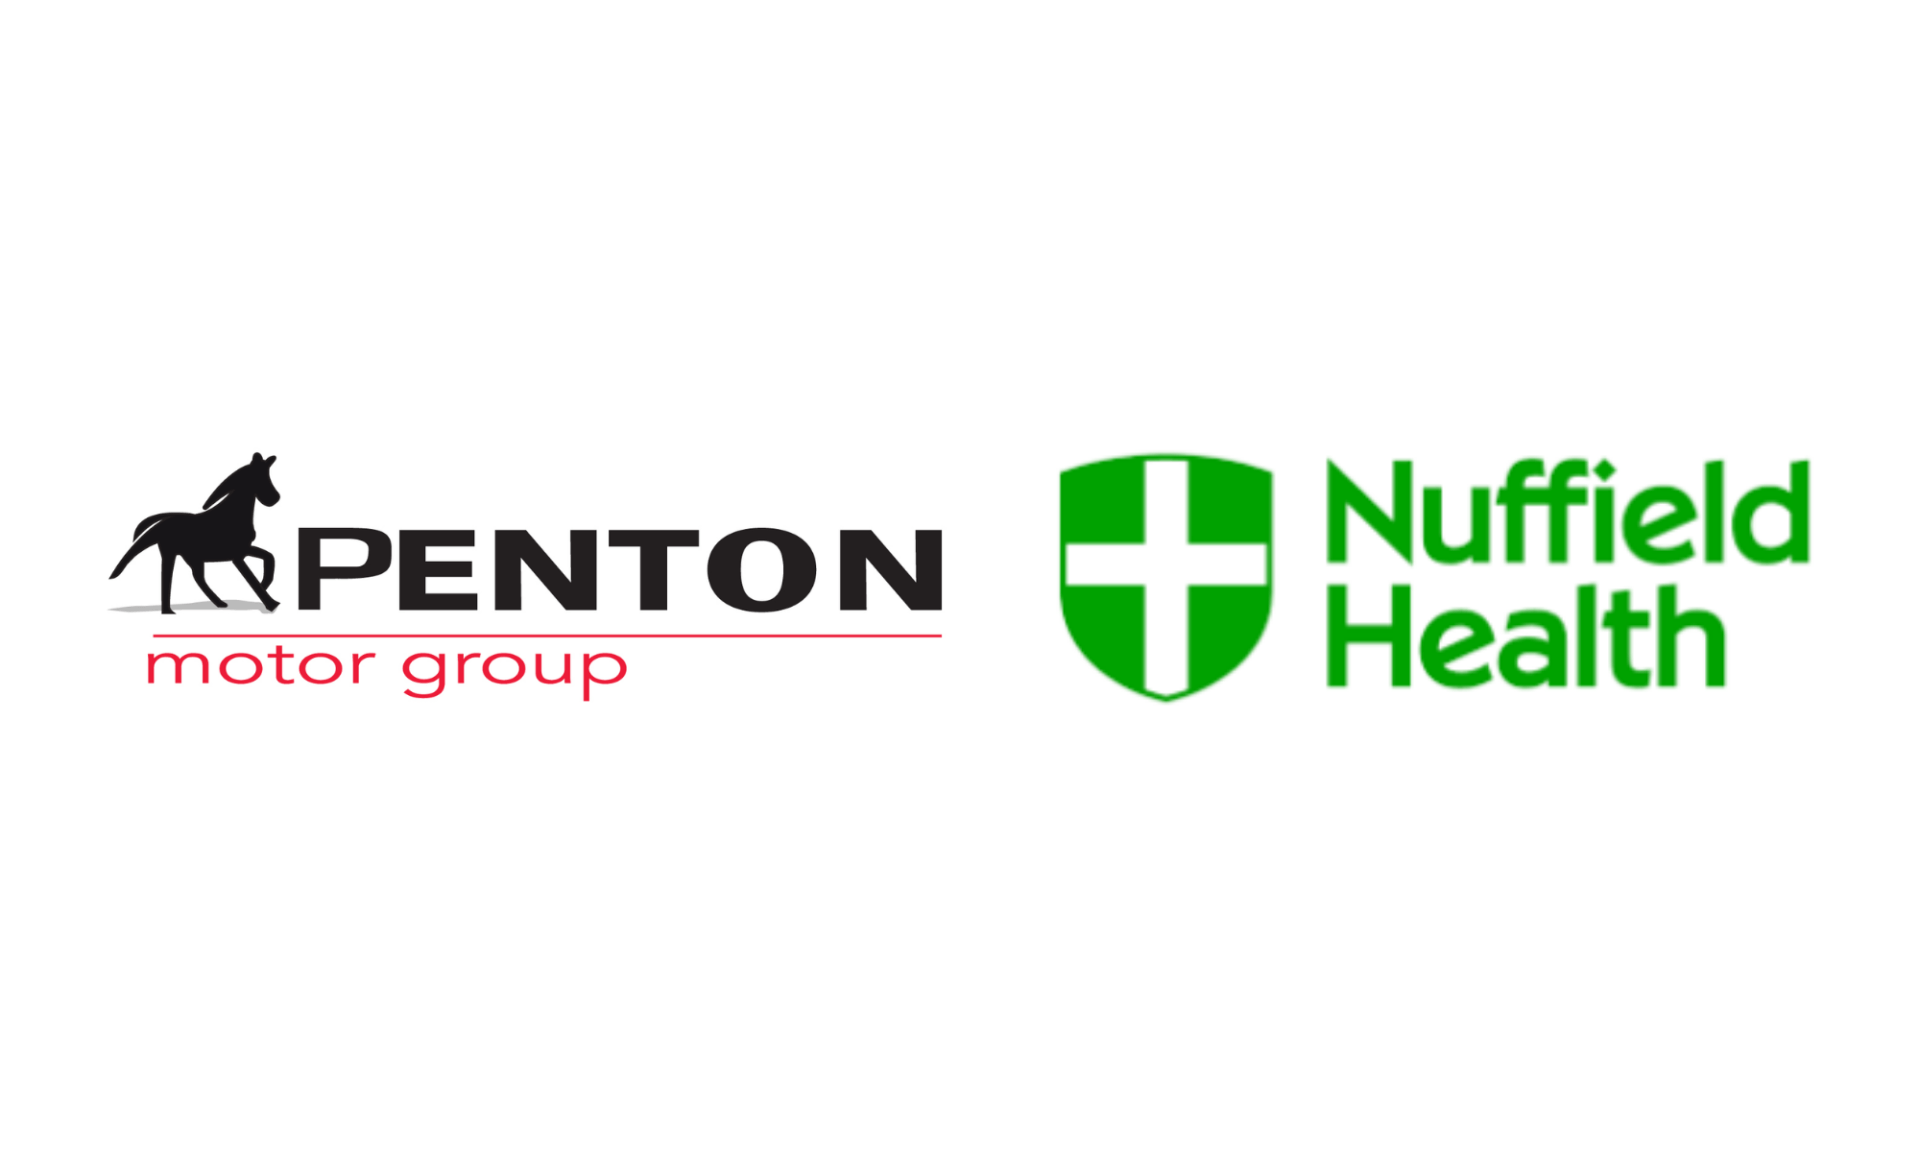 Penton Motor Group, Nuffield Health